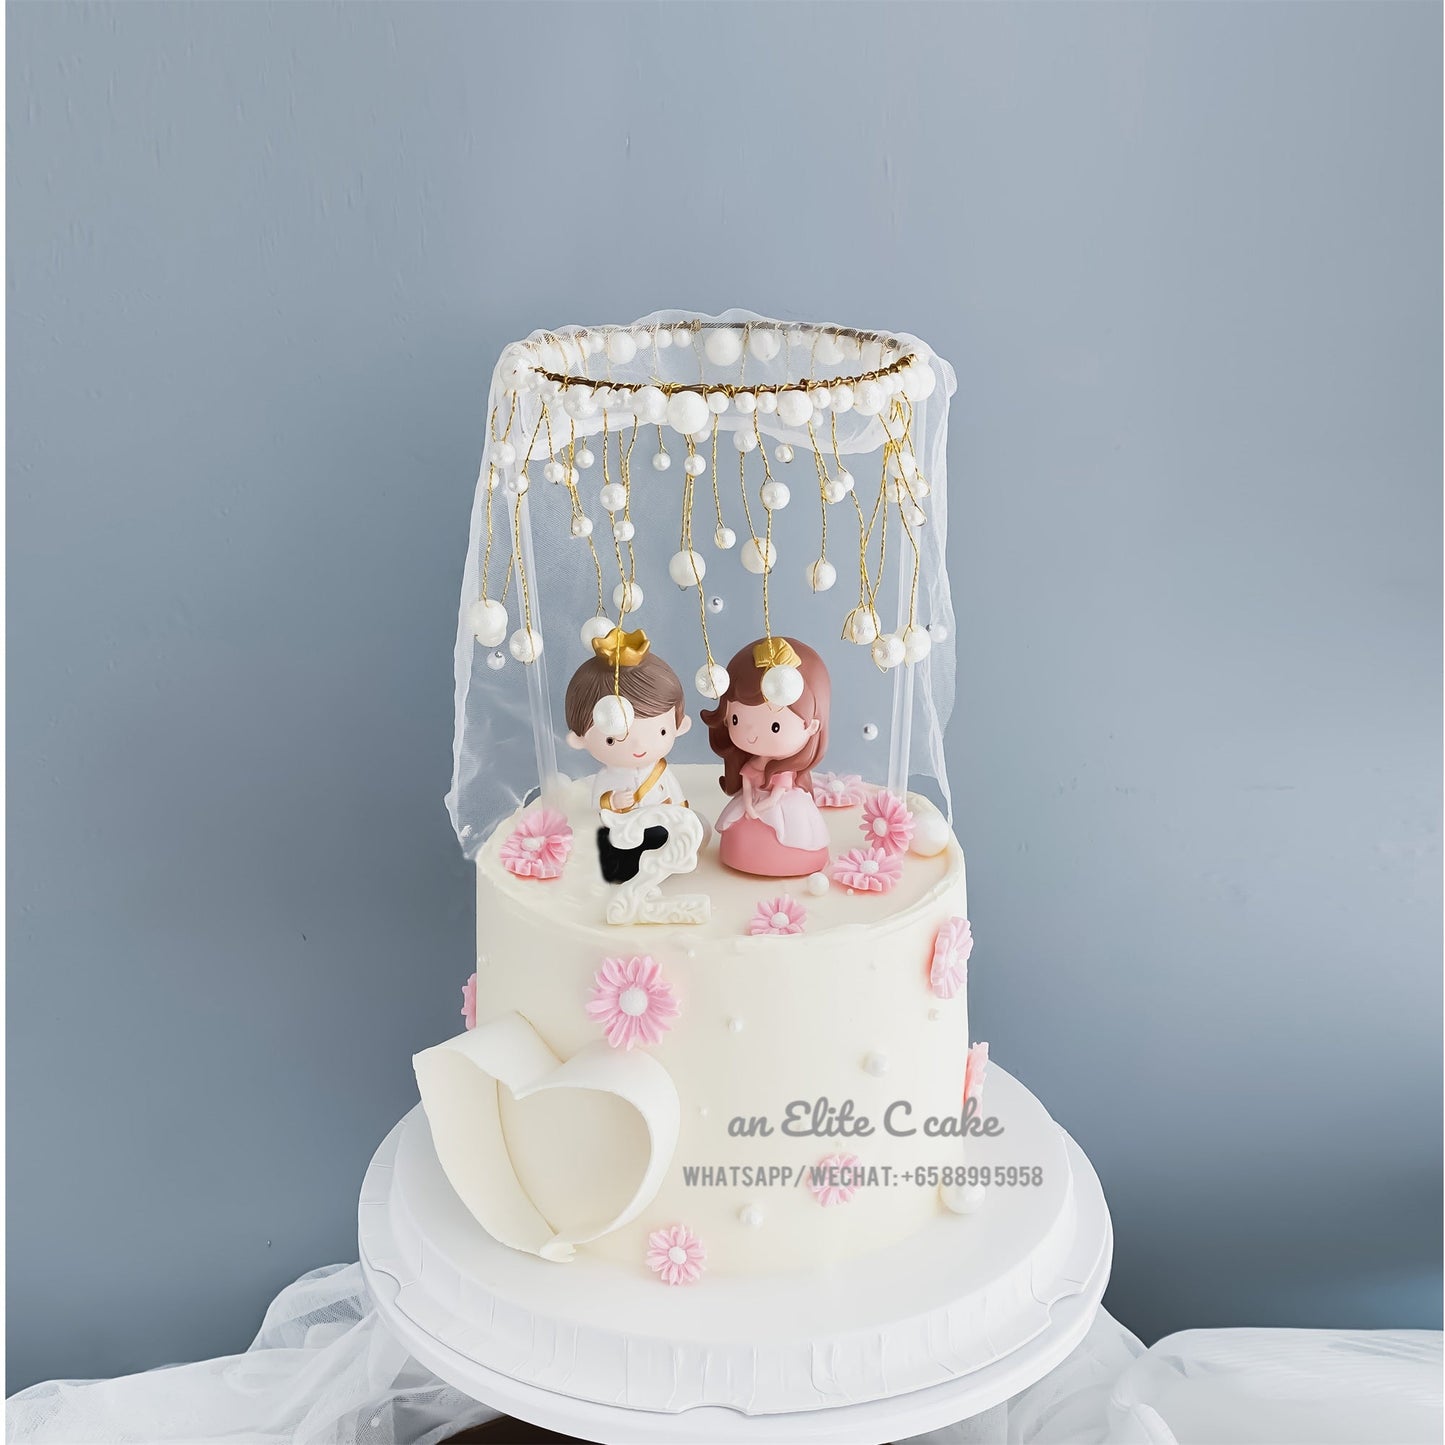 Couple Anniversary/Wedding Cake: Under the Same Roof